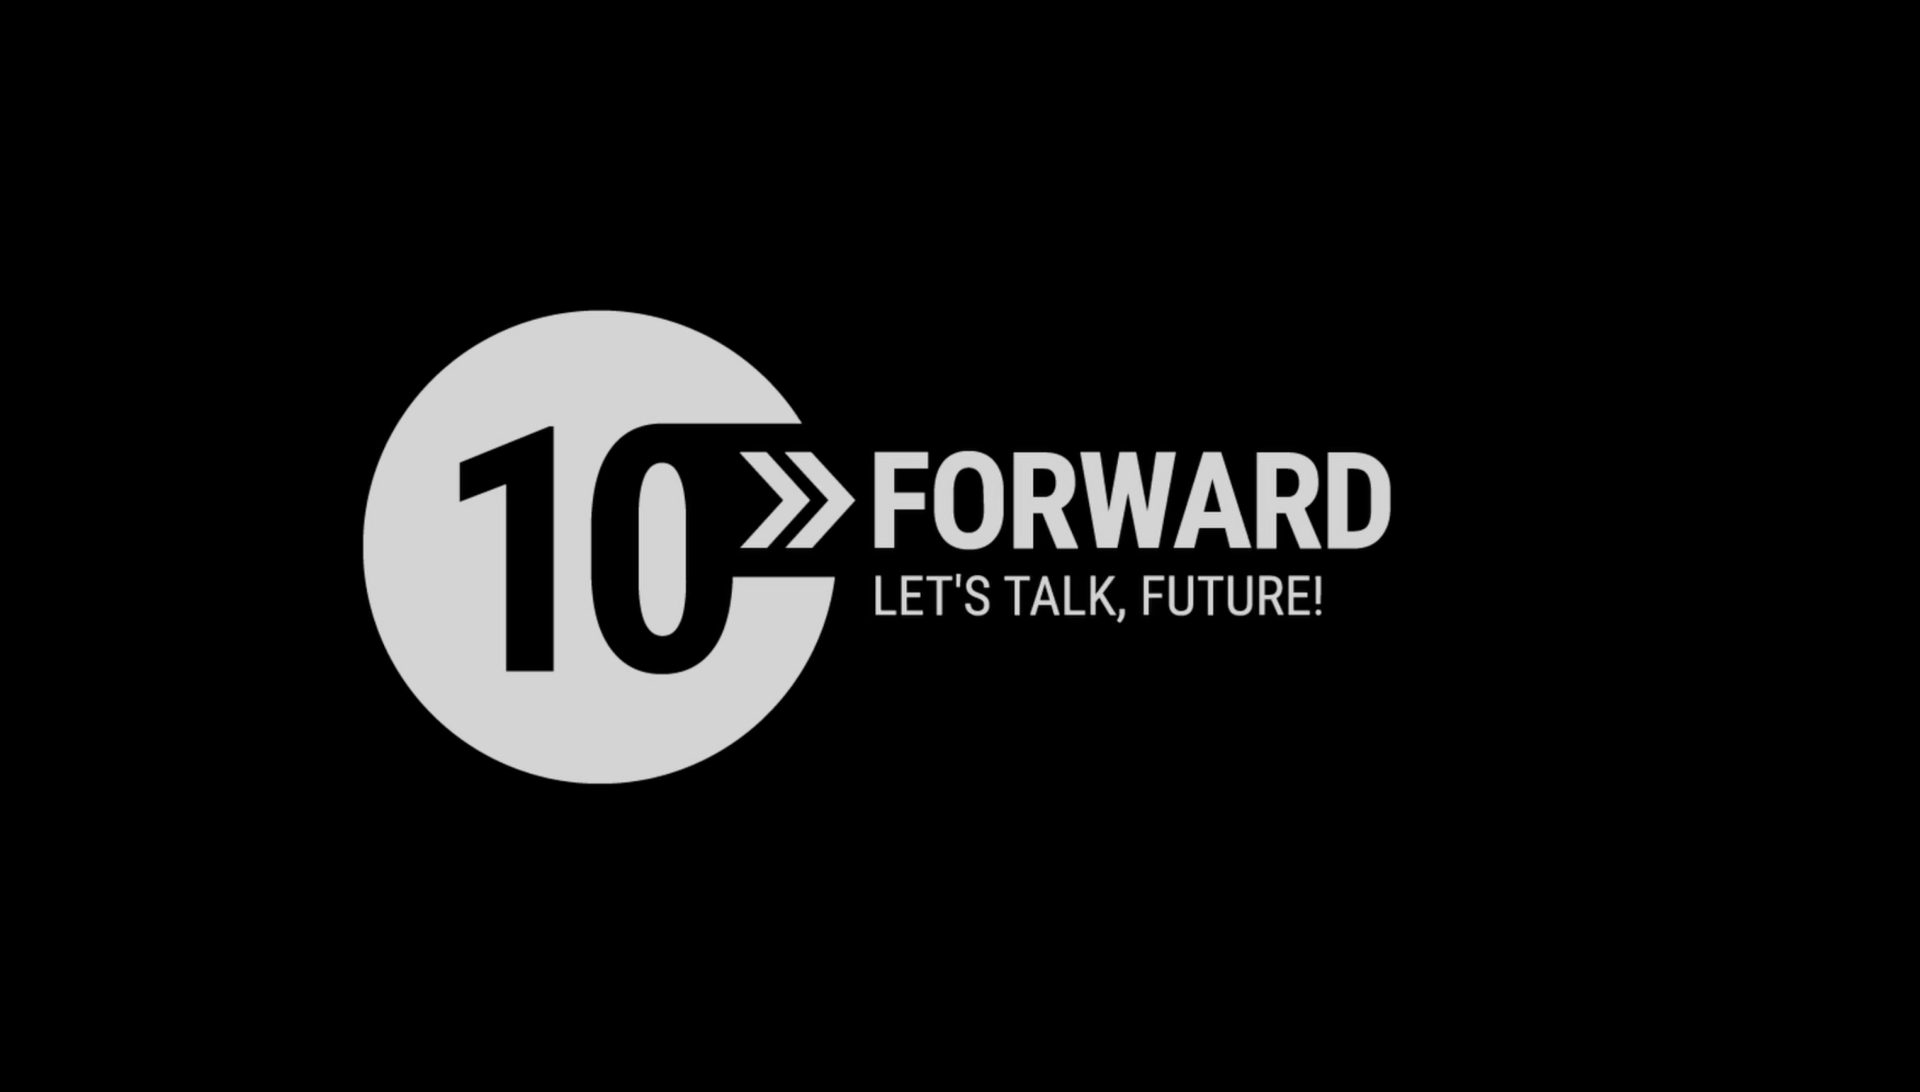 10FORWARD - Let's talk, Future!